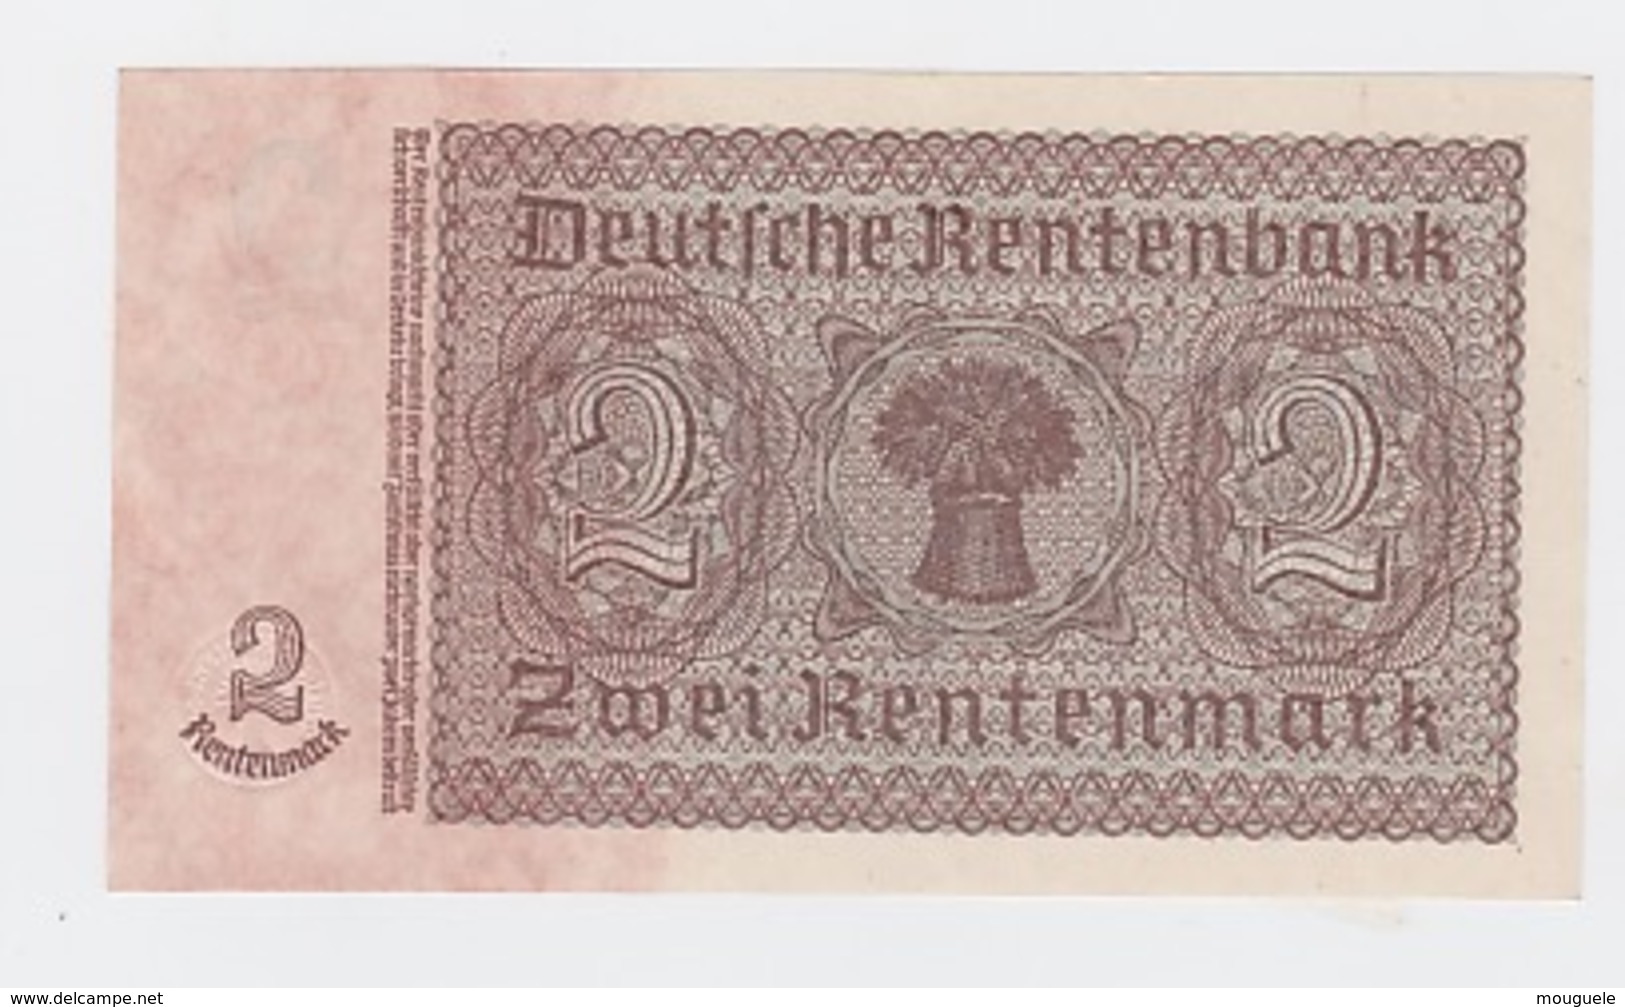 Billet De 2 Rentenmark Pick 174  Du 30-1_1937    Neuf - 1 Rentenmark